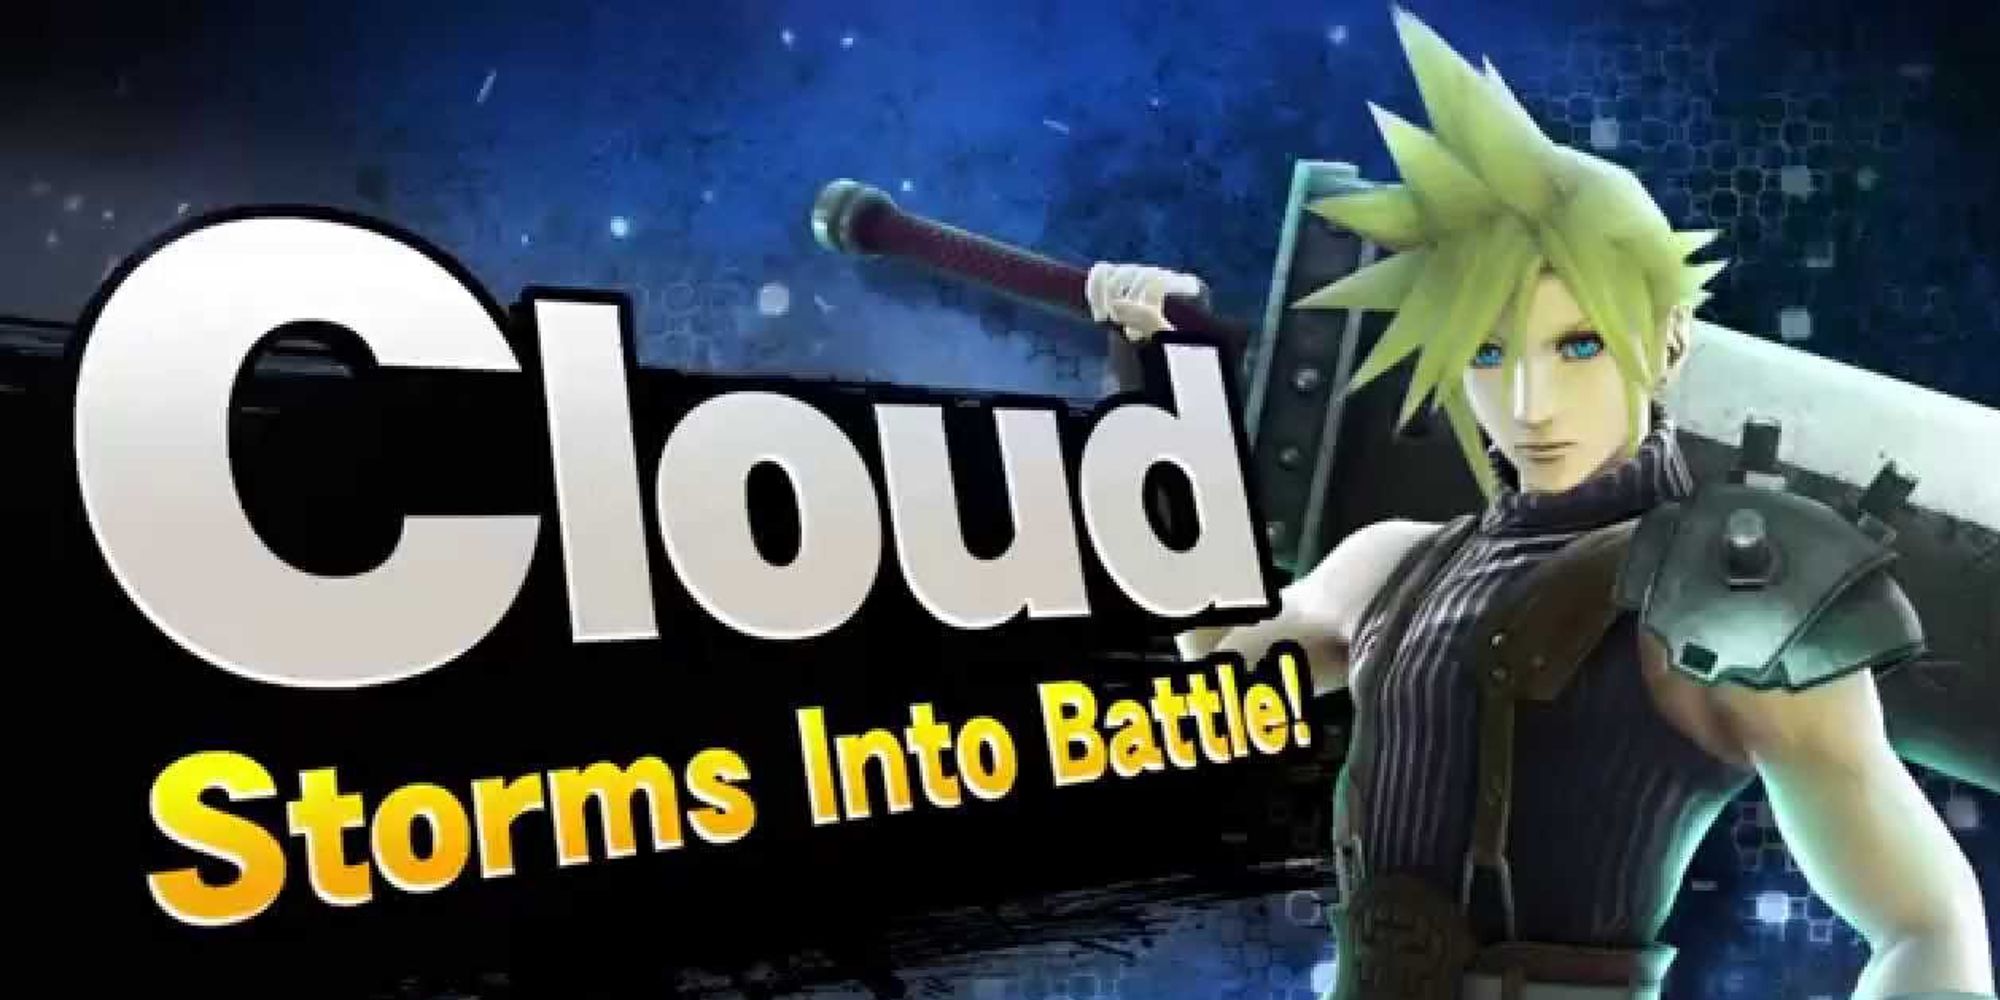 Cloud's title card for SSB4 reading "Cloud Storms Into Battle"